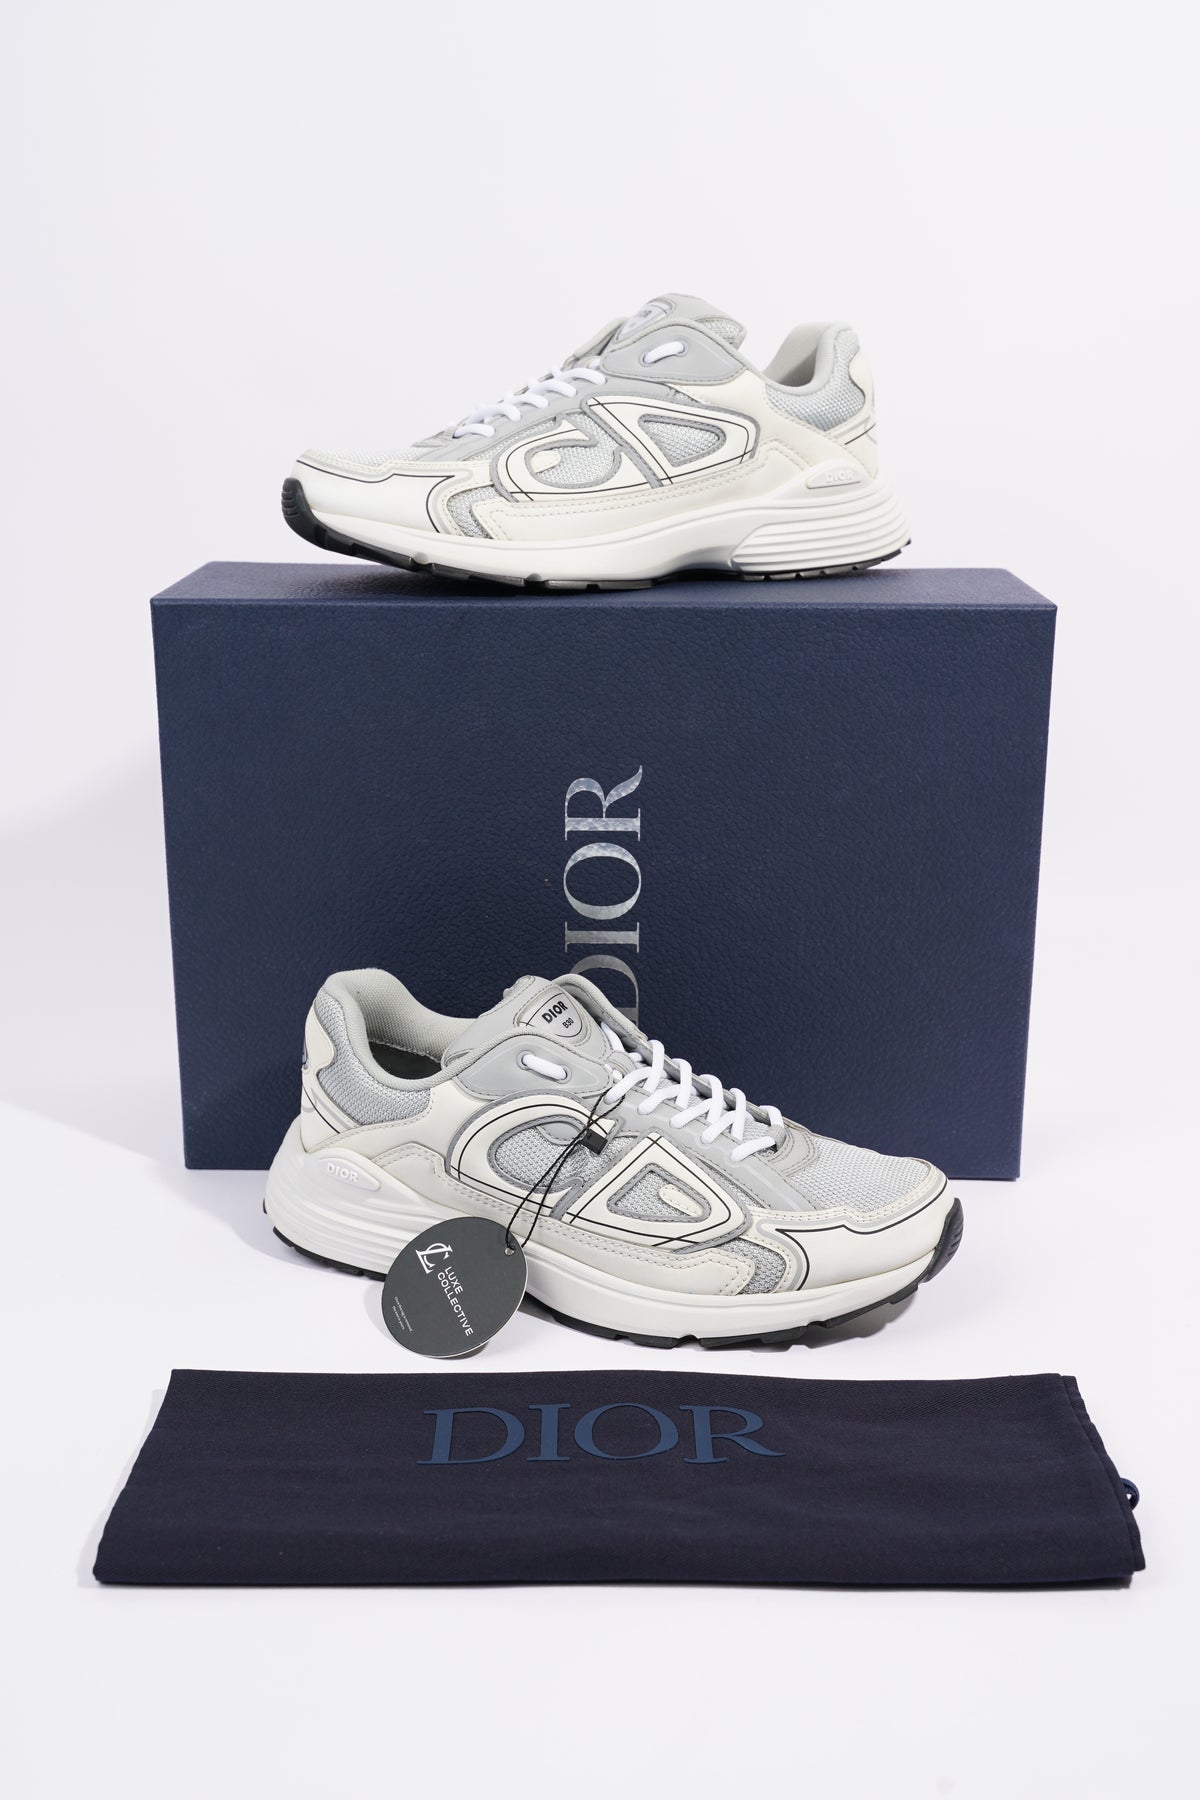 Dior, Shoes, Dior B22 Grey White Size 7 Men